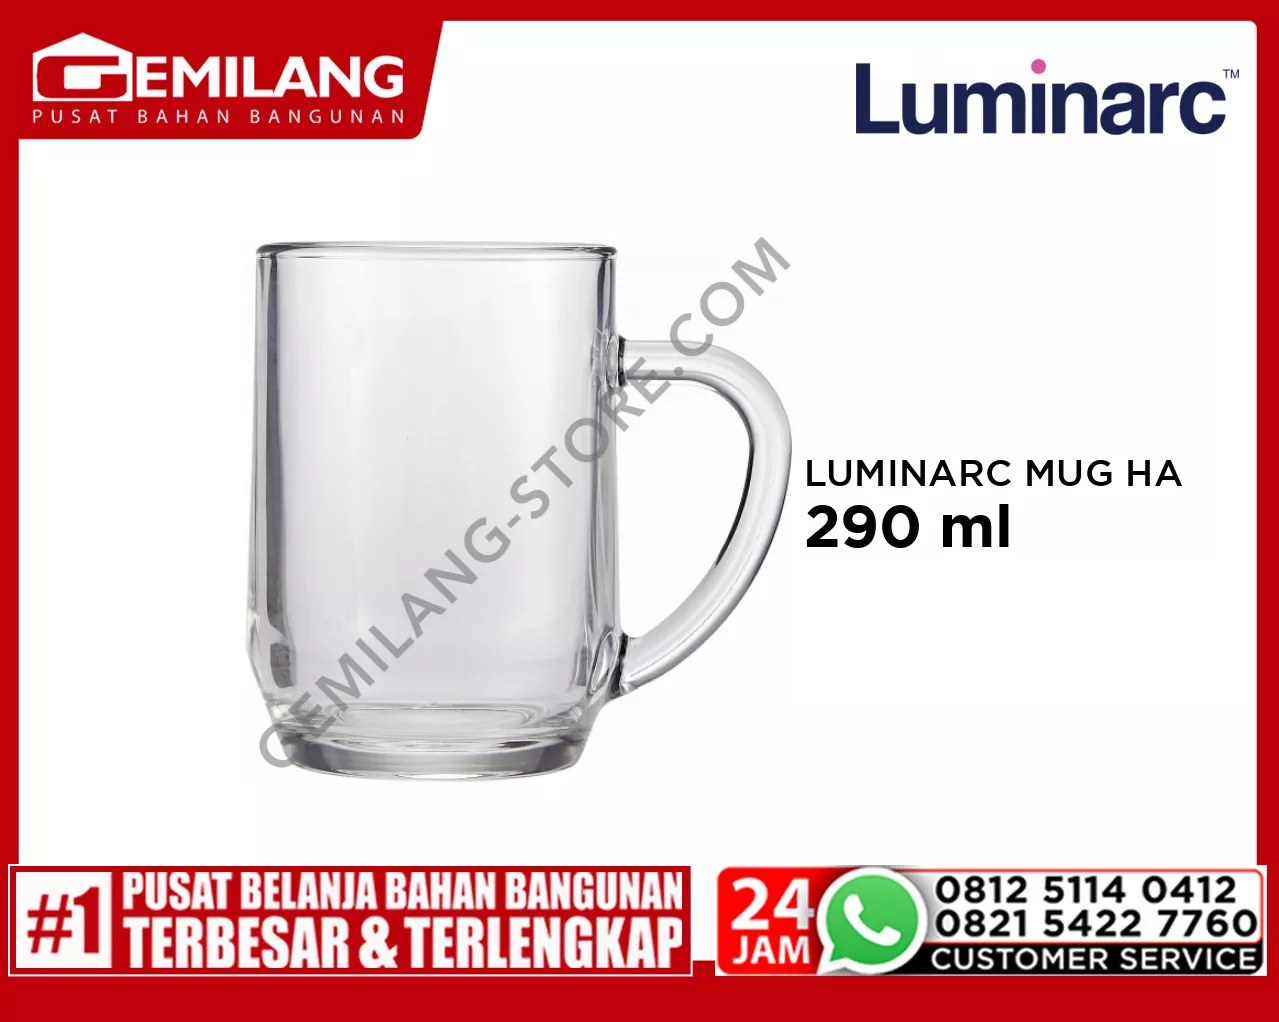 LUMINARC MUG HAWORTH 29cl